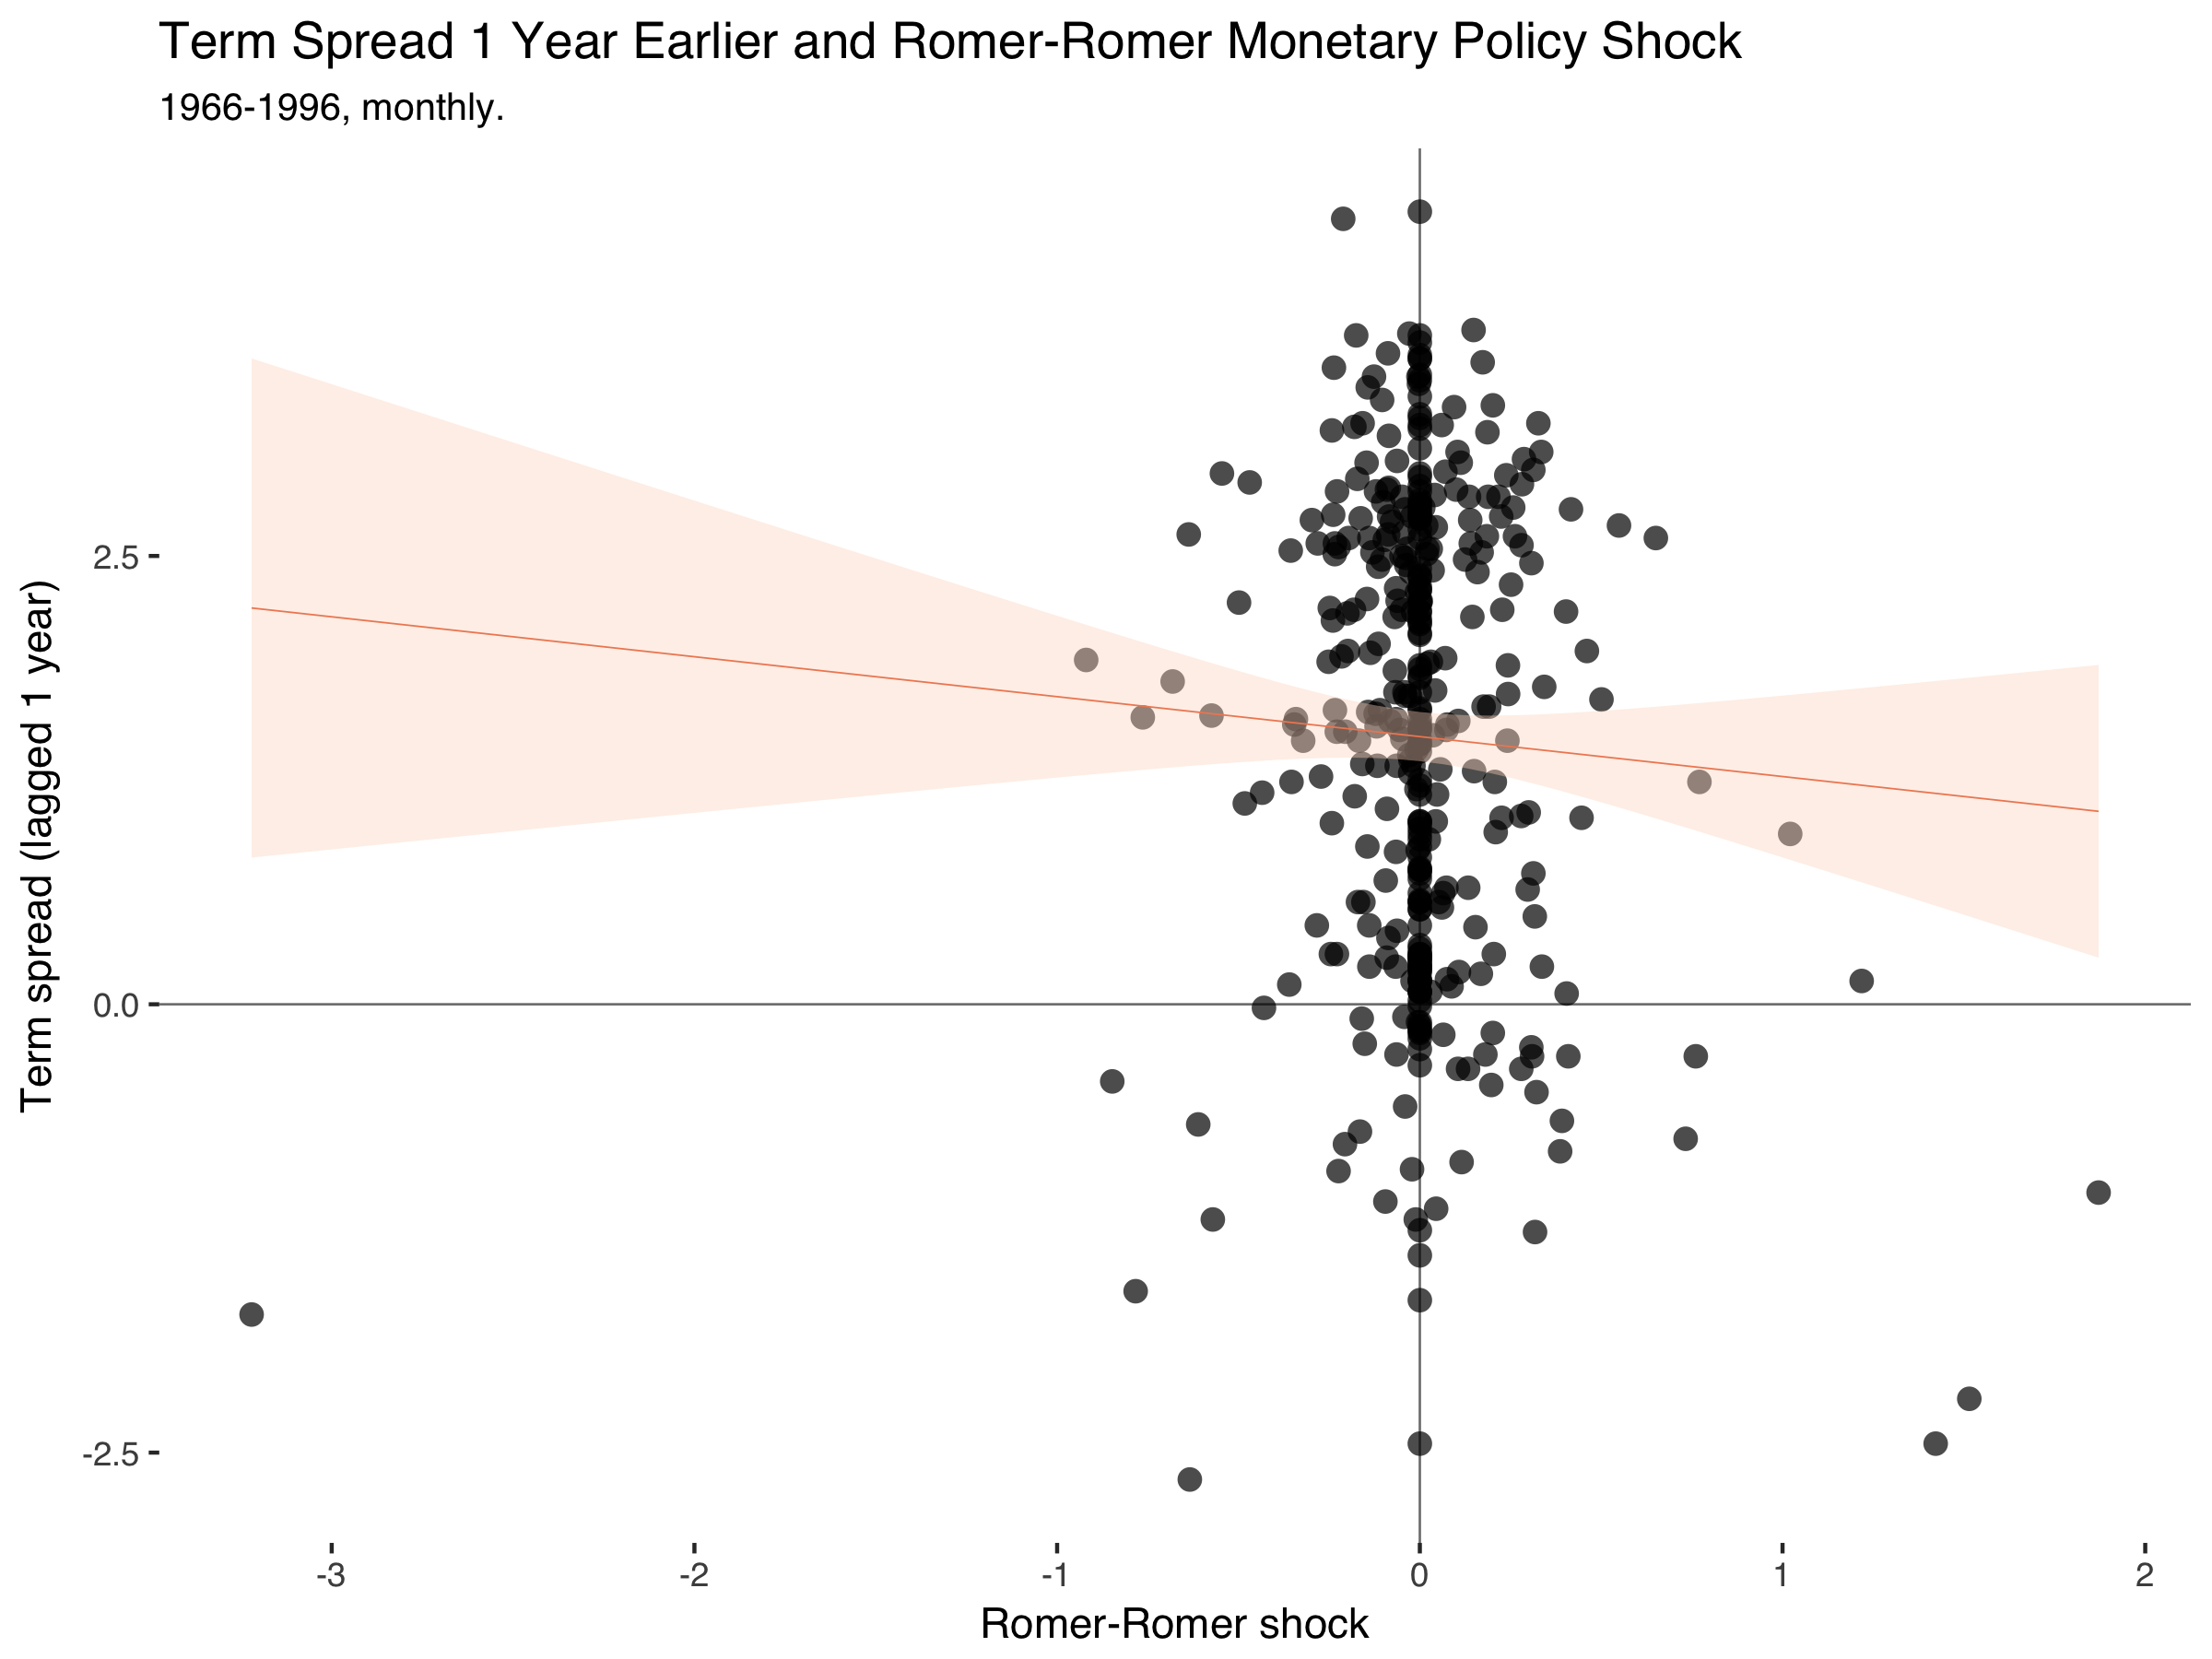 Term spread against Romer-Romer monetary policy shocks